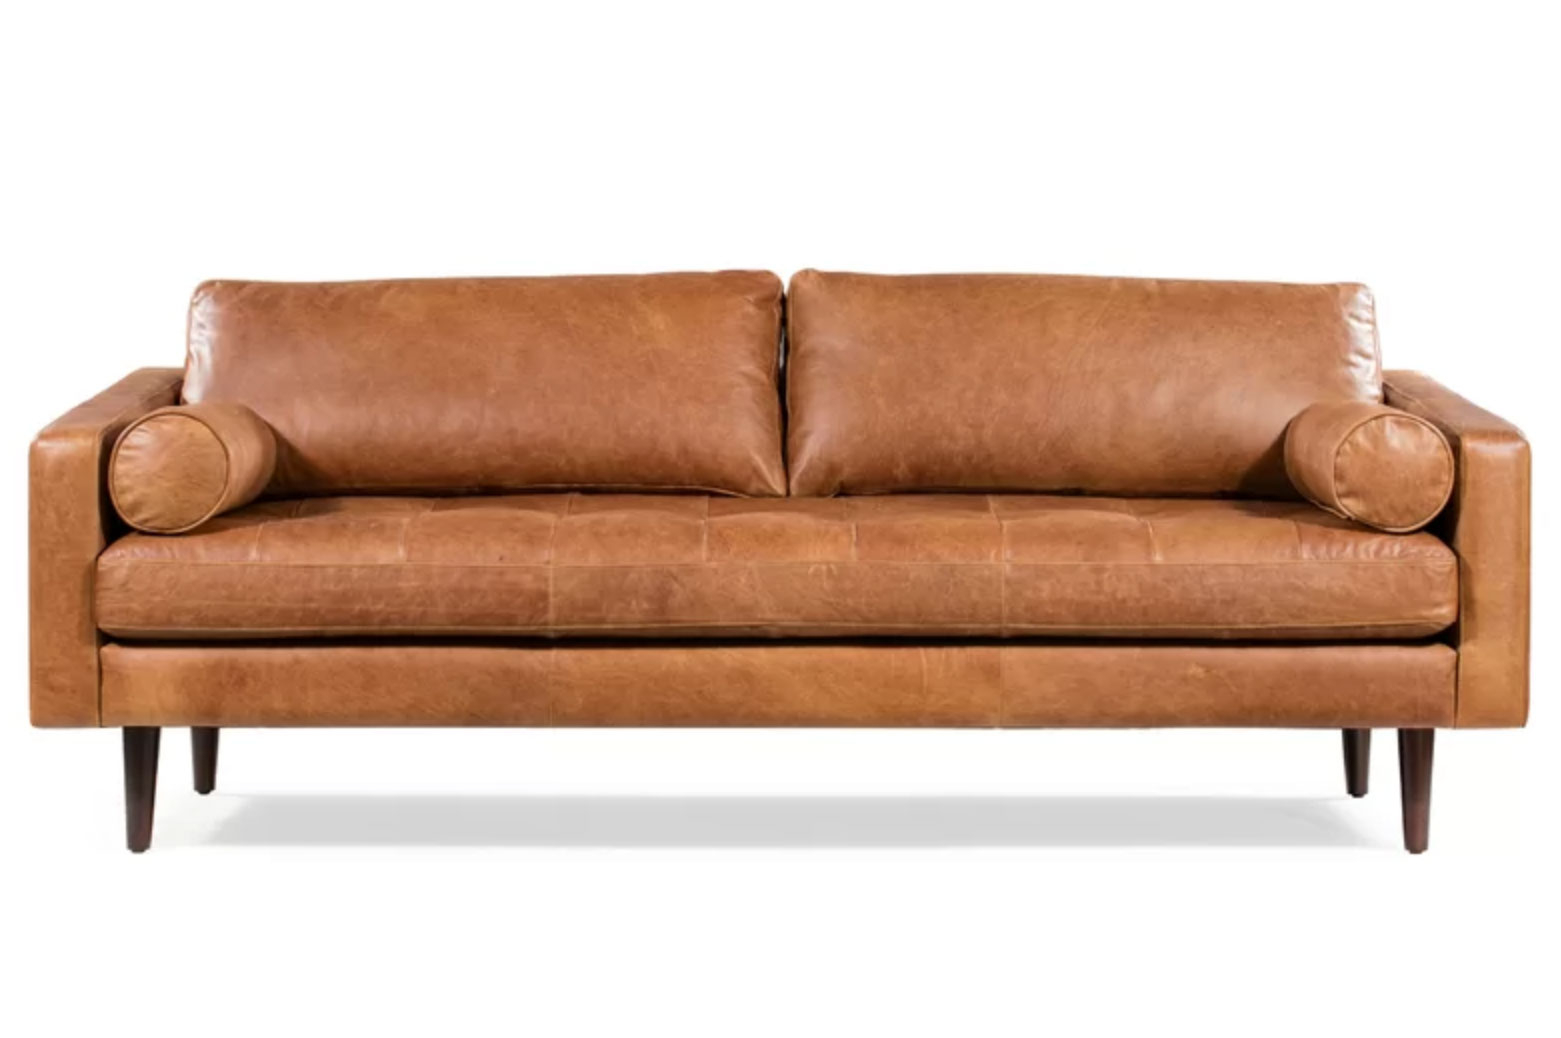 High Quality Affordable Leather Sofa • Patio Ideas